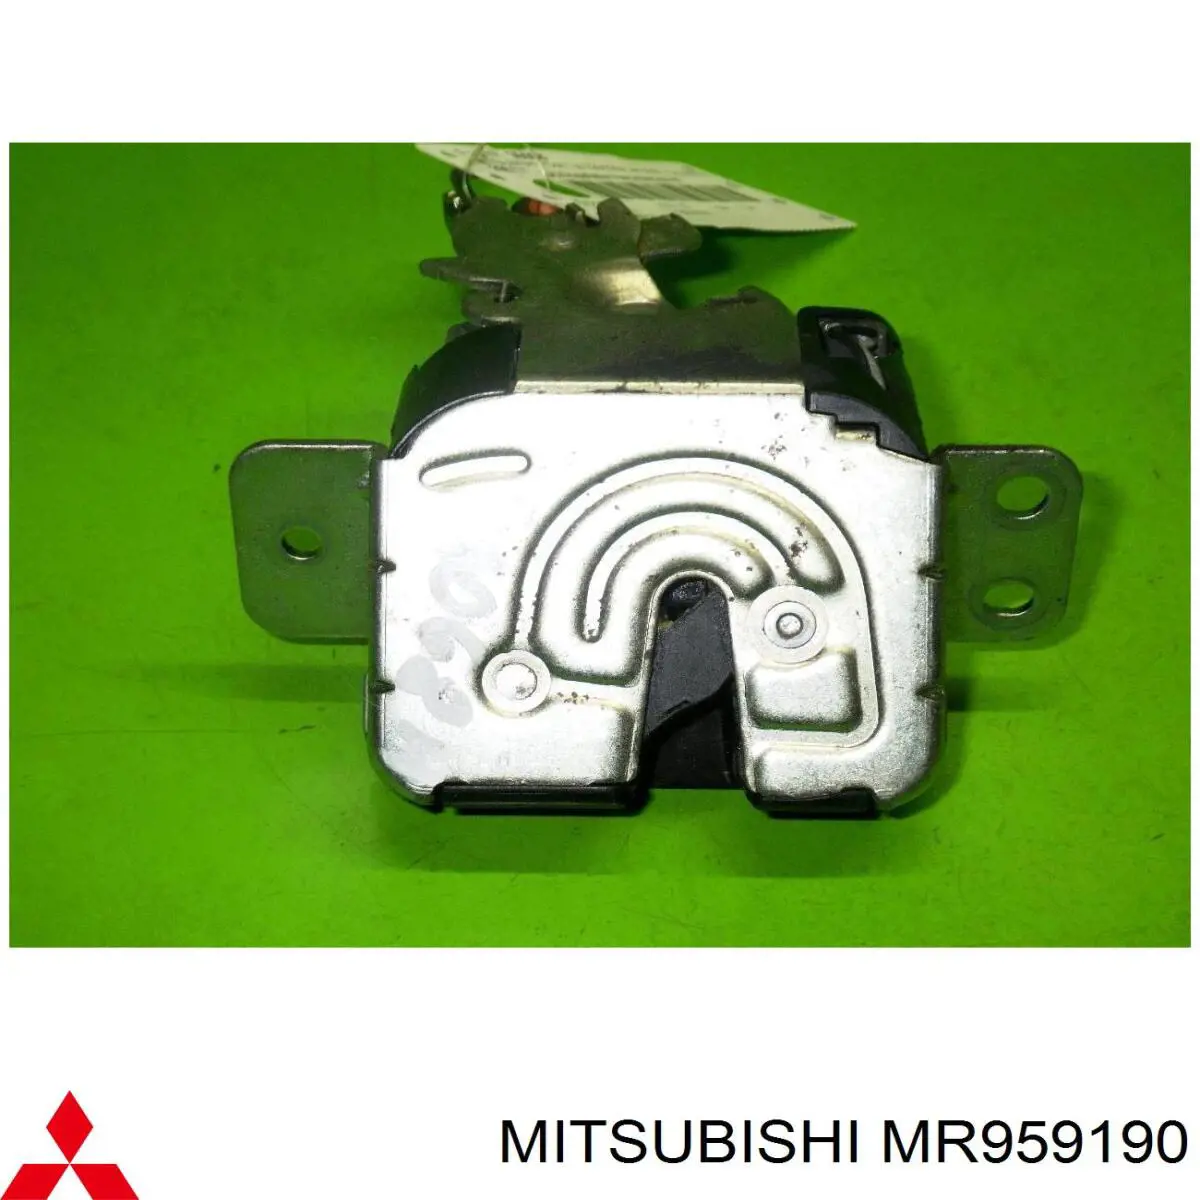 MR959190 Mitsubishi cerradura de maletero